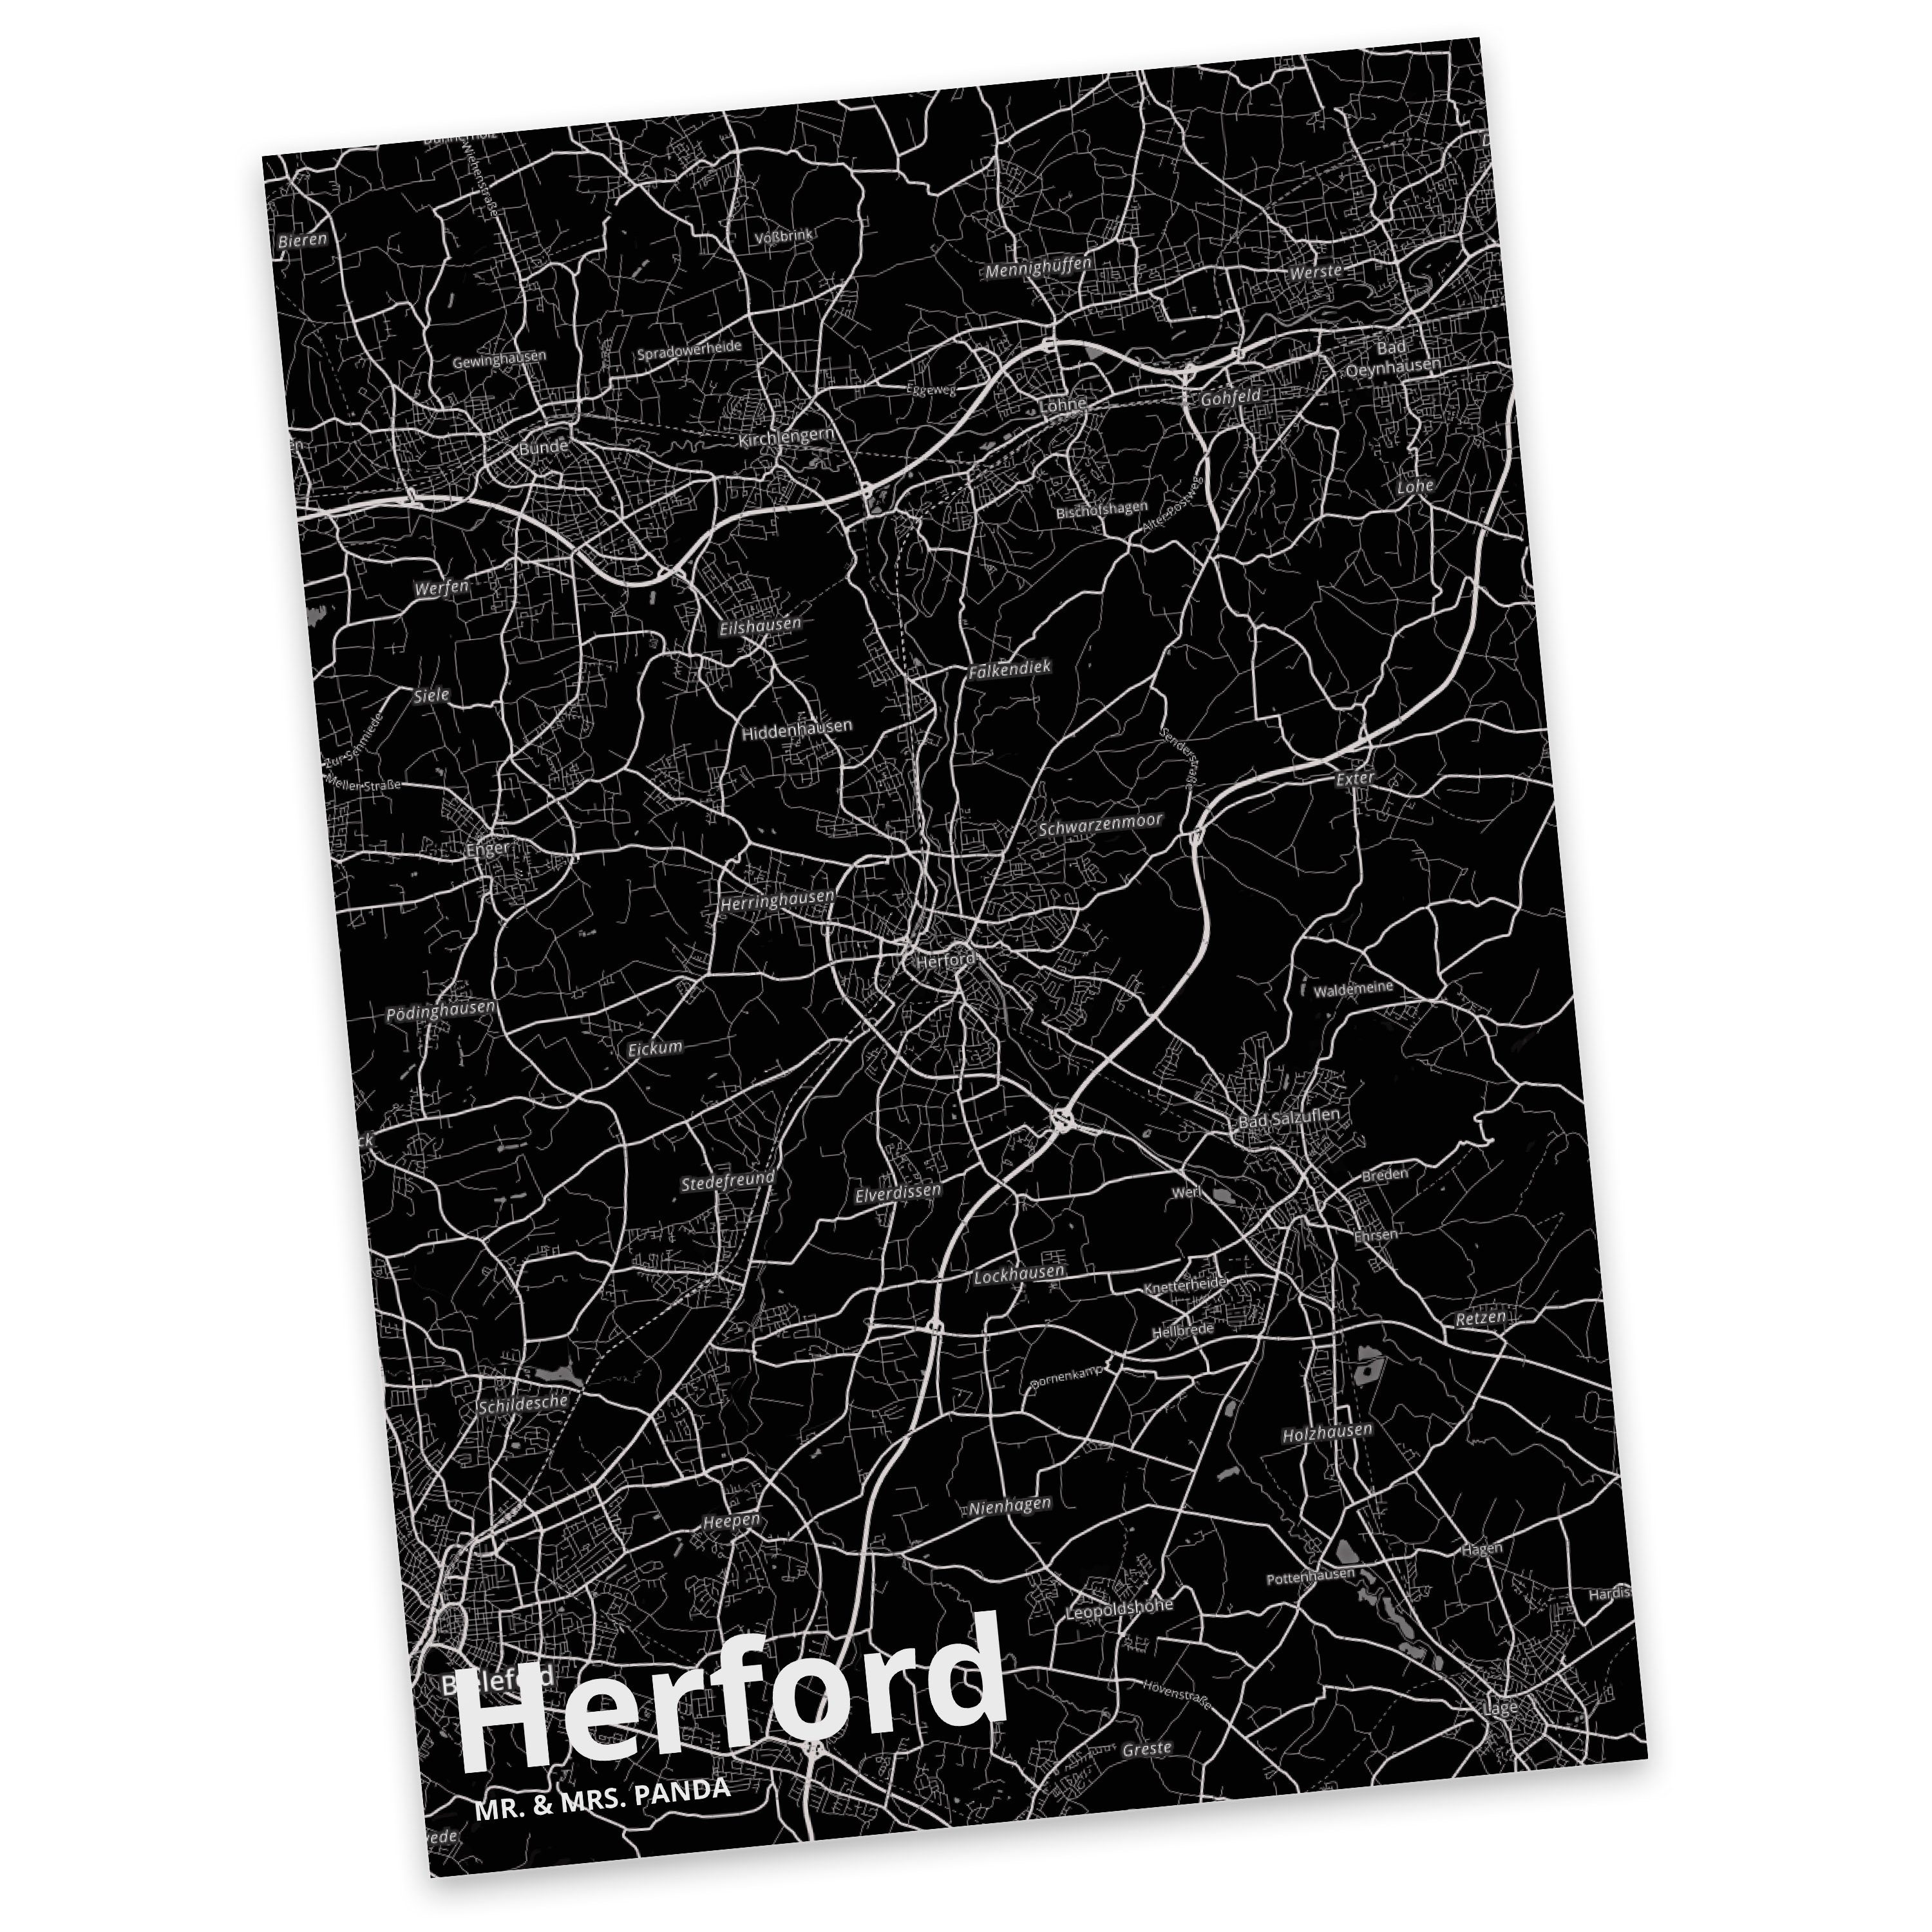 Mr. & Mrs. Panda Postkarte Herford - Geschenk, Stadt Dorf Karte Landkarte Map Stadtplan, Städte